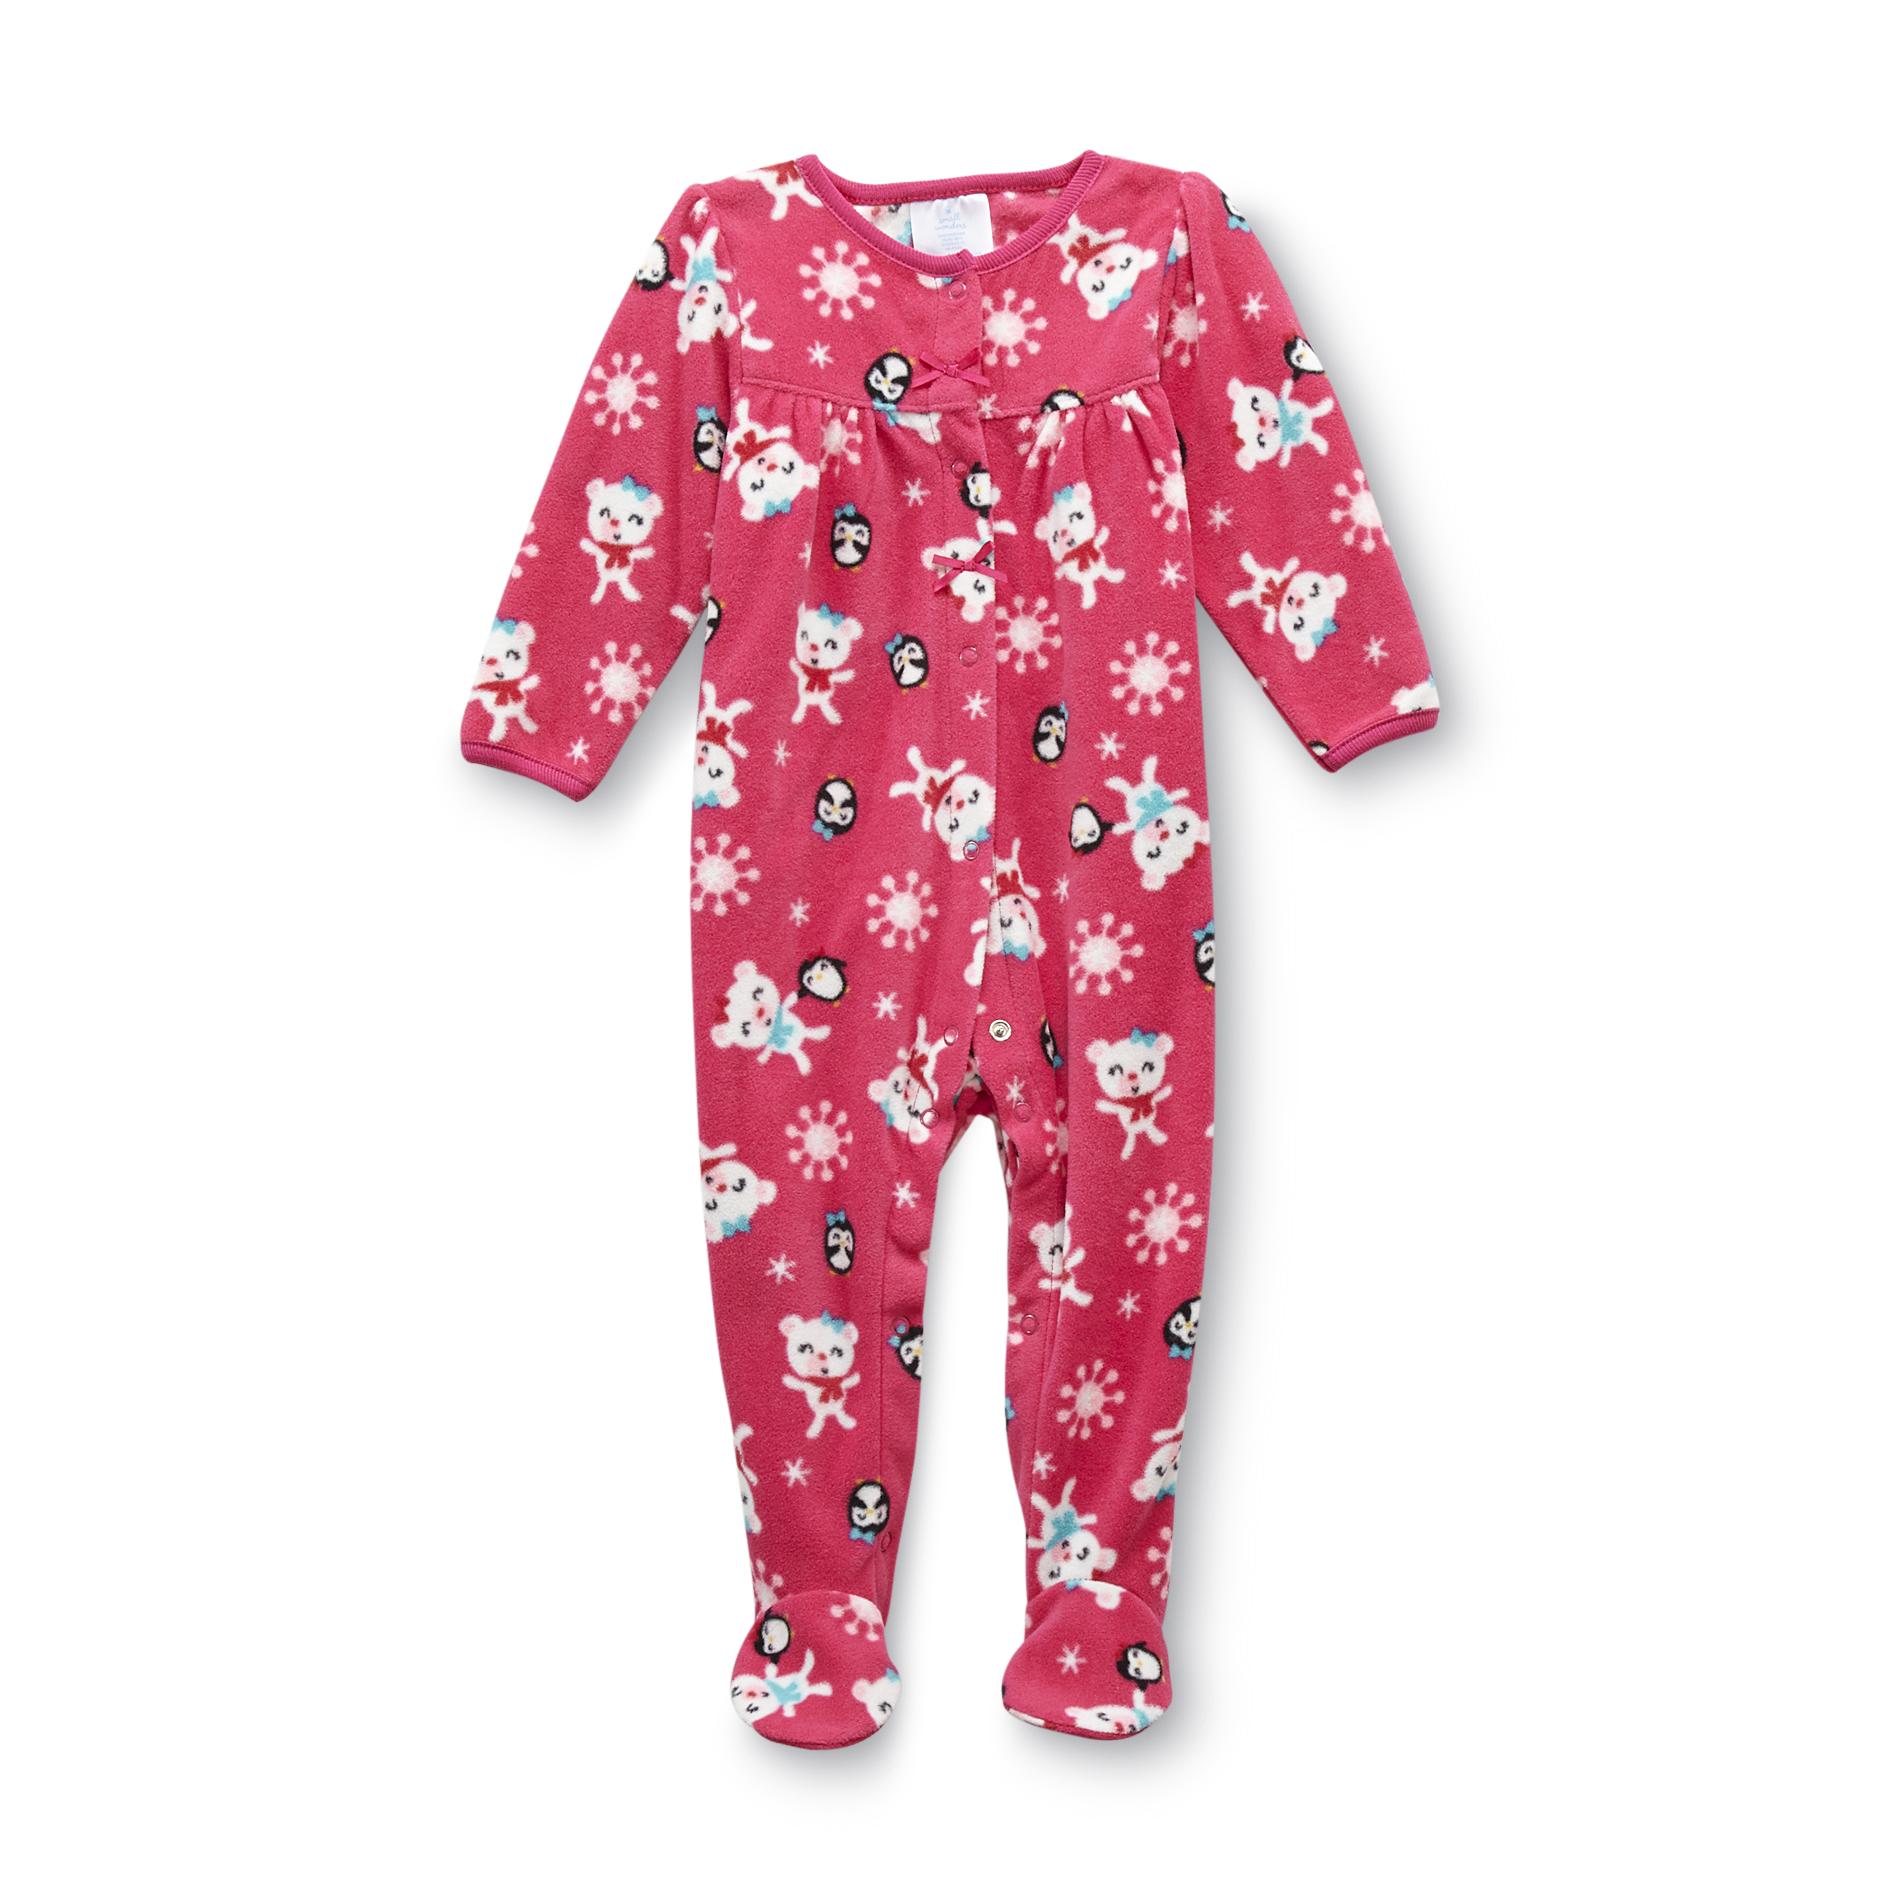 Small Wonders Newborn Girl's Footed Sleeper Pajamas - Animals